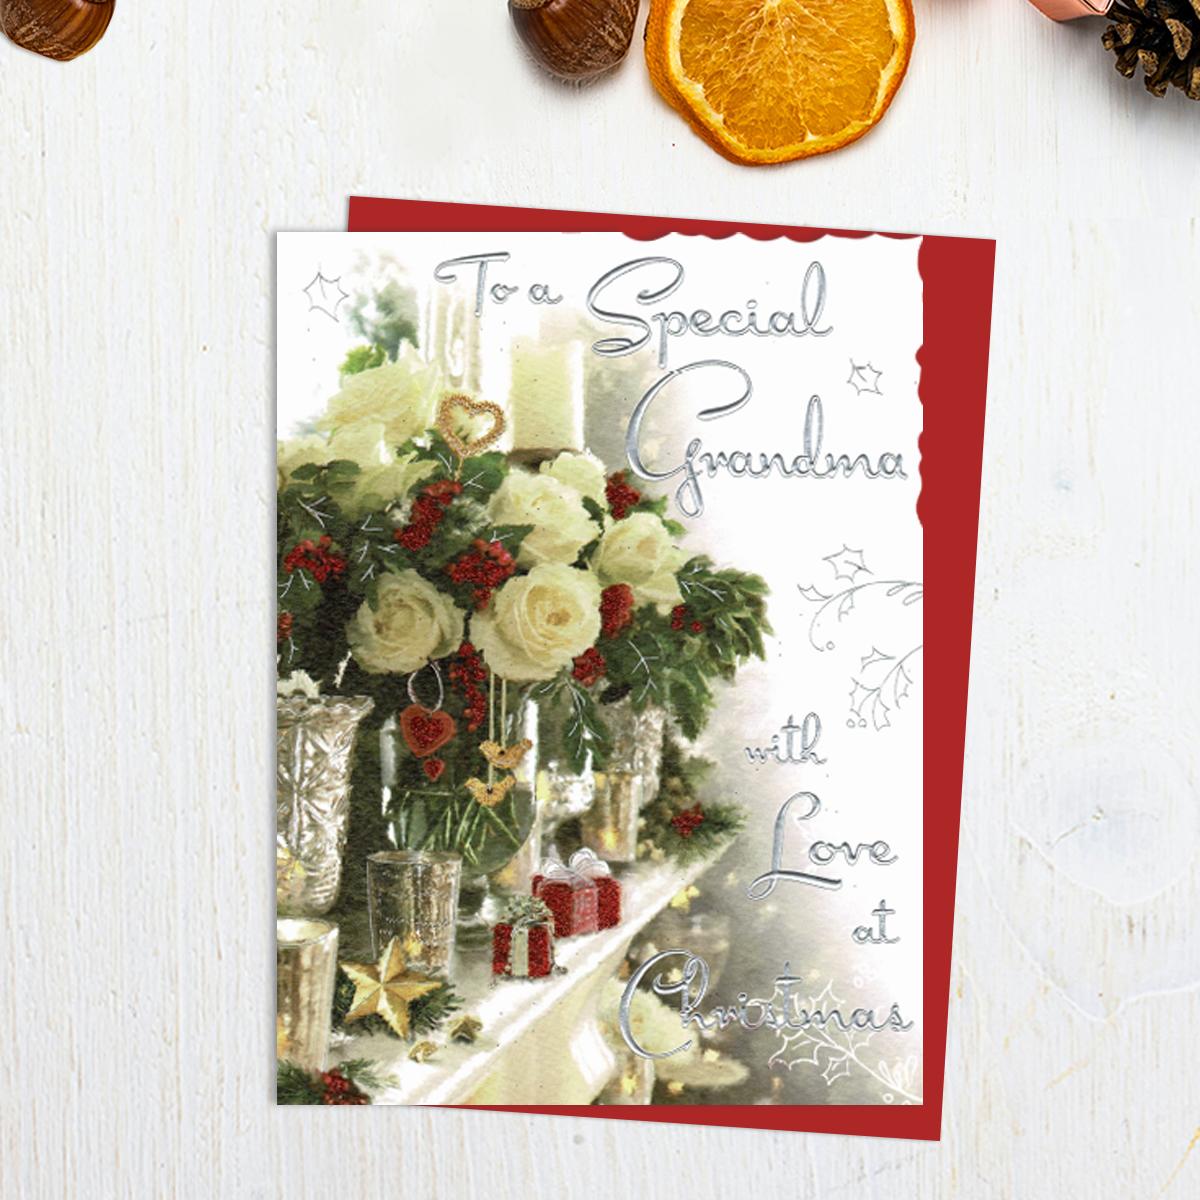 Special Grandma Christmas Card Alongside Its Red Envelope